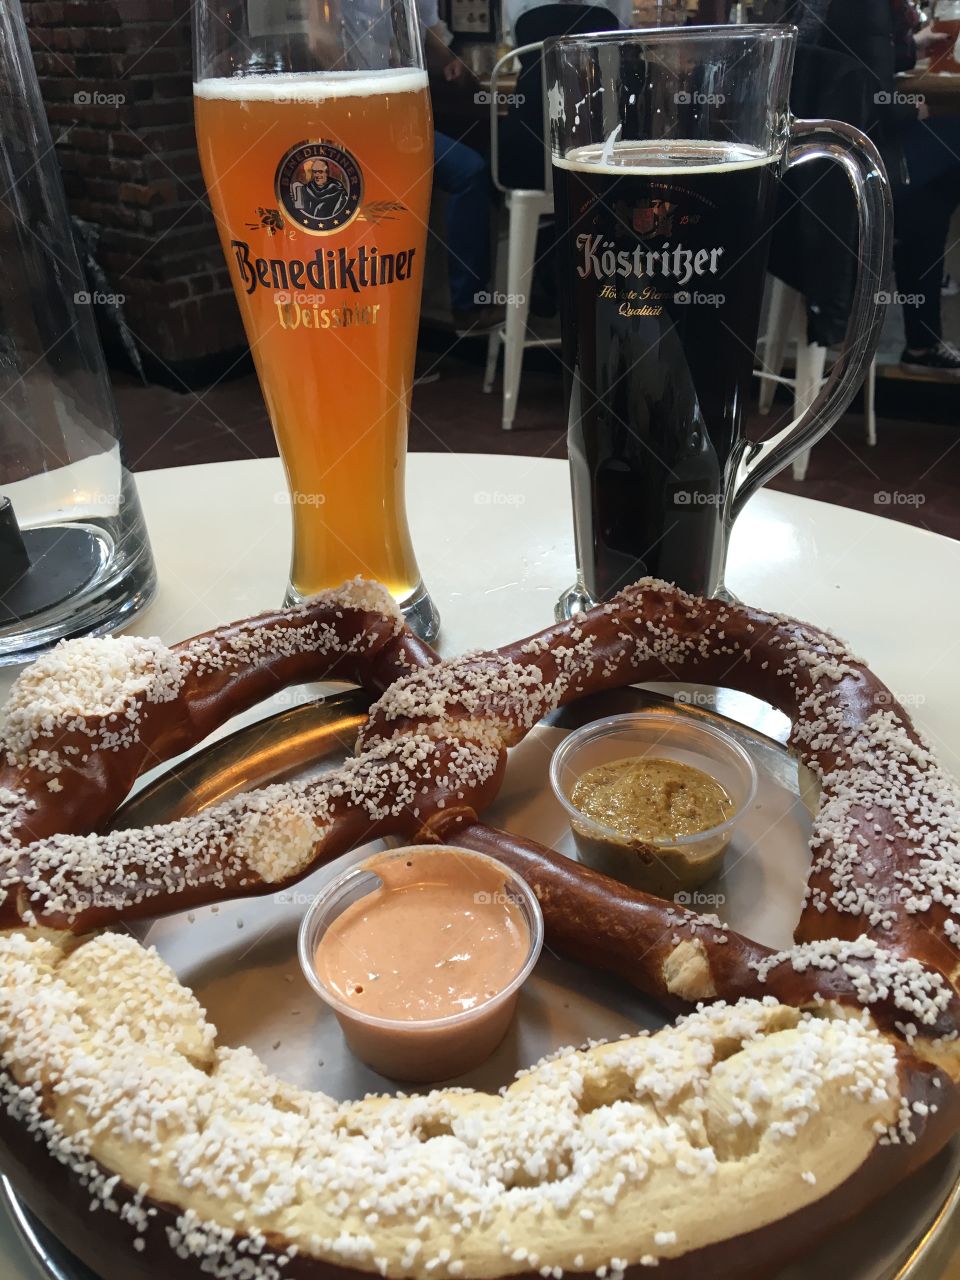 German pretzels and beers in NYC